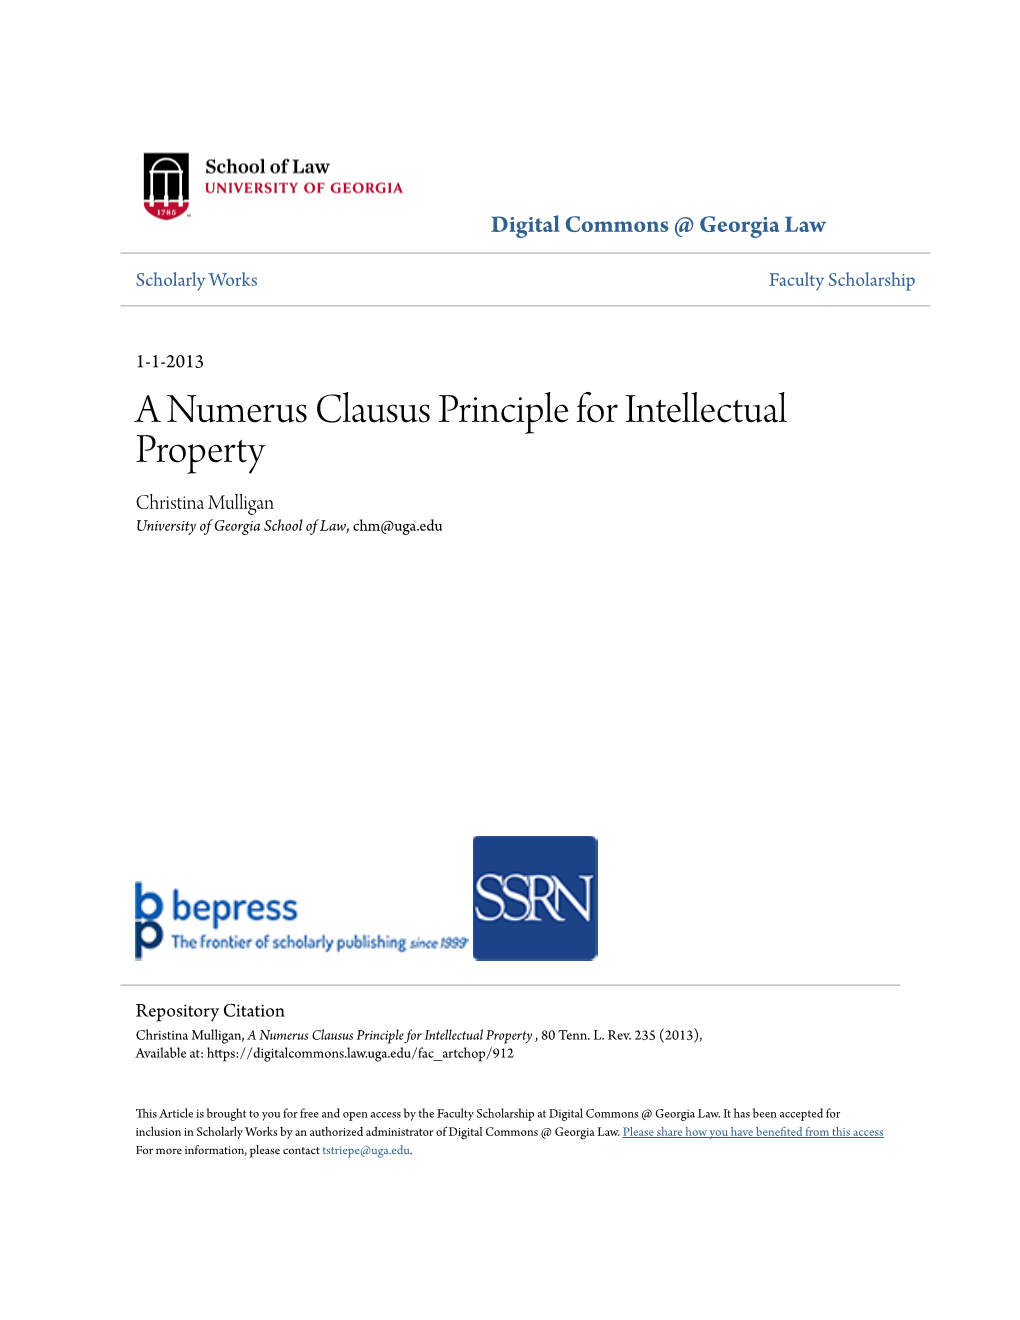 A Numerus Clausus Principle for Intellectual Property Christina Mulligan University of Georgia School of Law, Chm@Uga.Edu